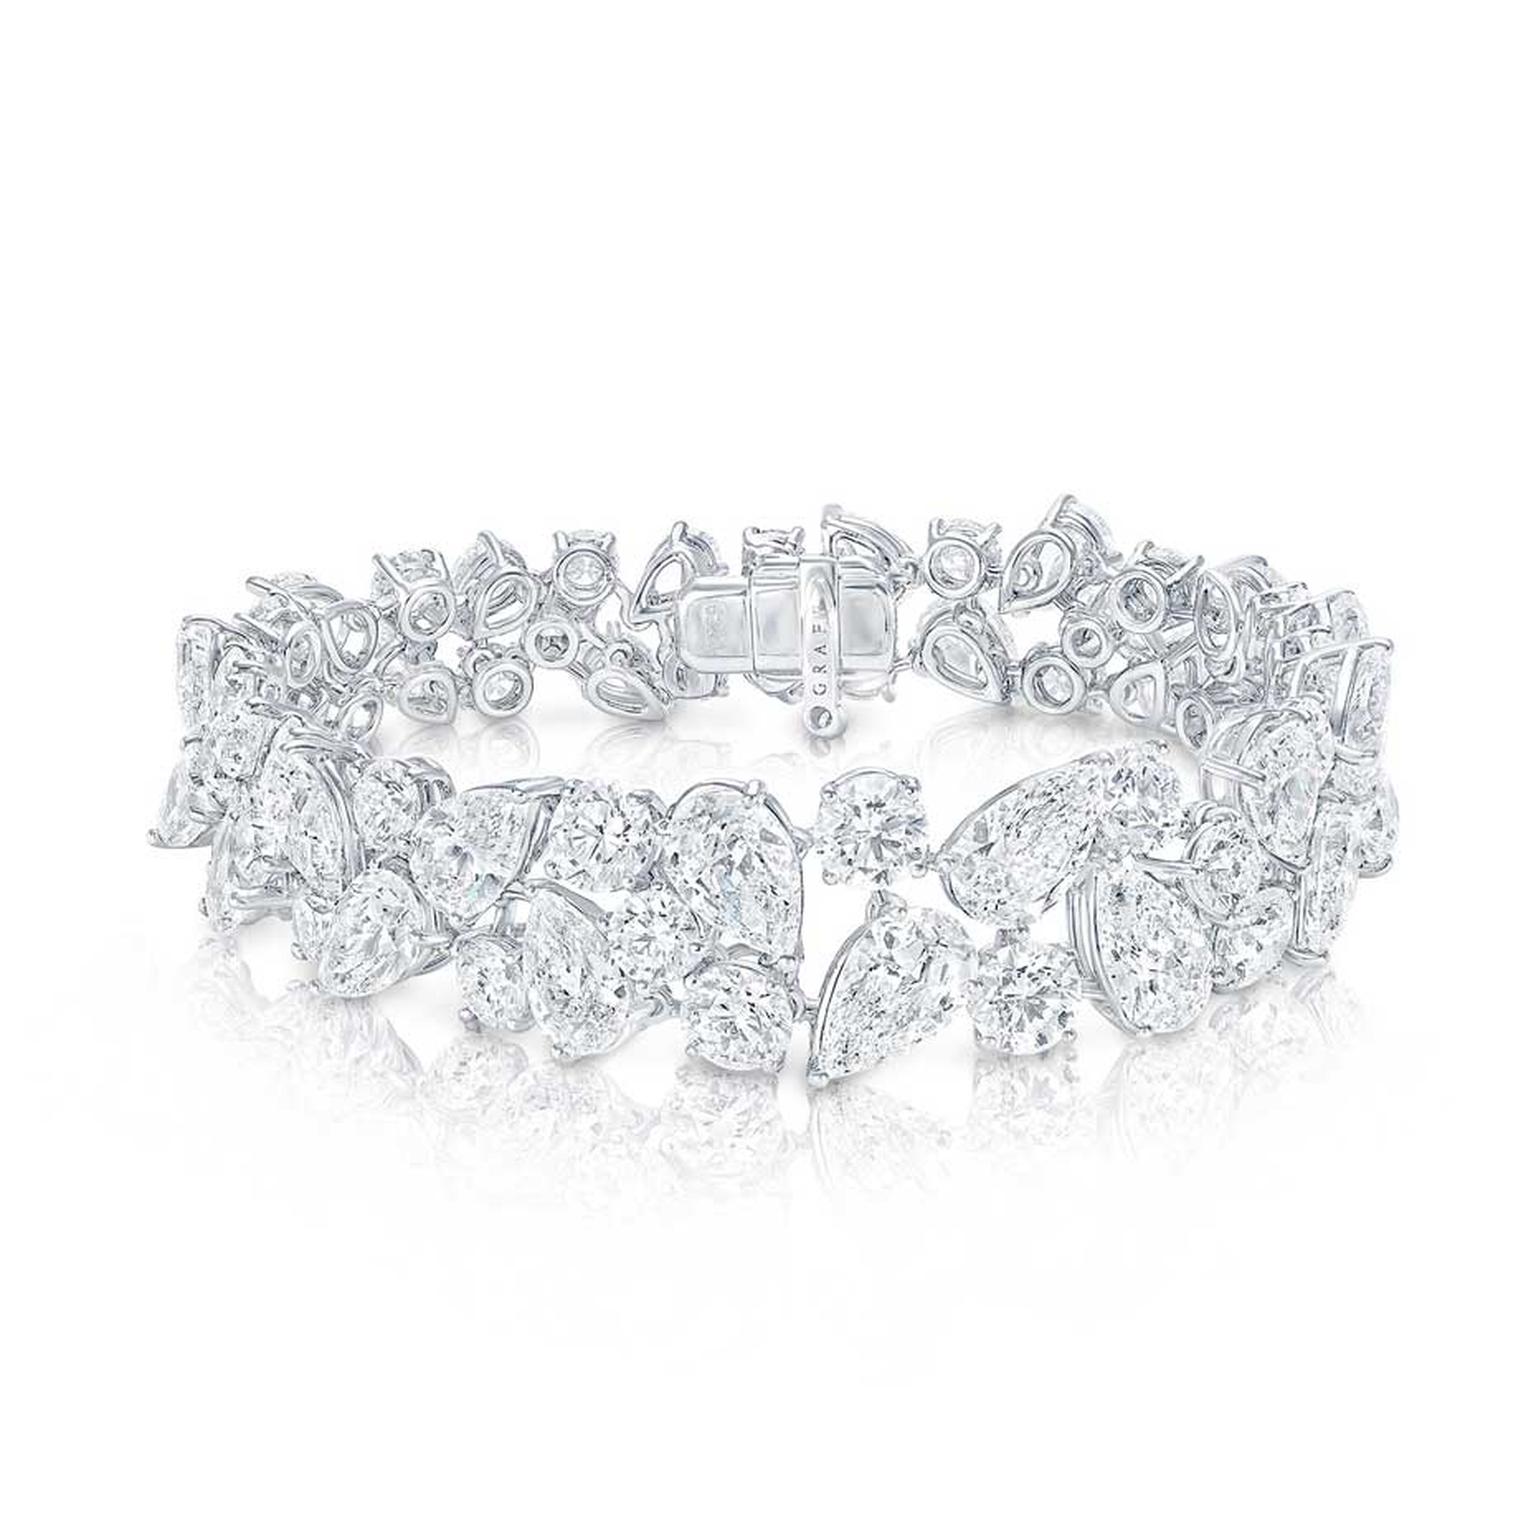 Graff Rhythm collection platinum bracelet featuring brilliant, pear and baguette-shaped diamonds